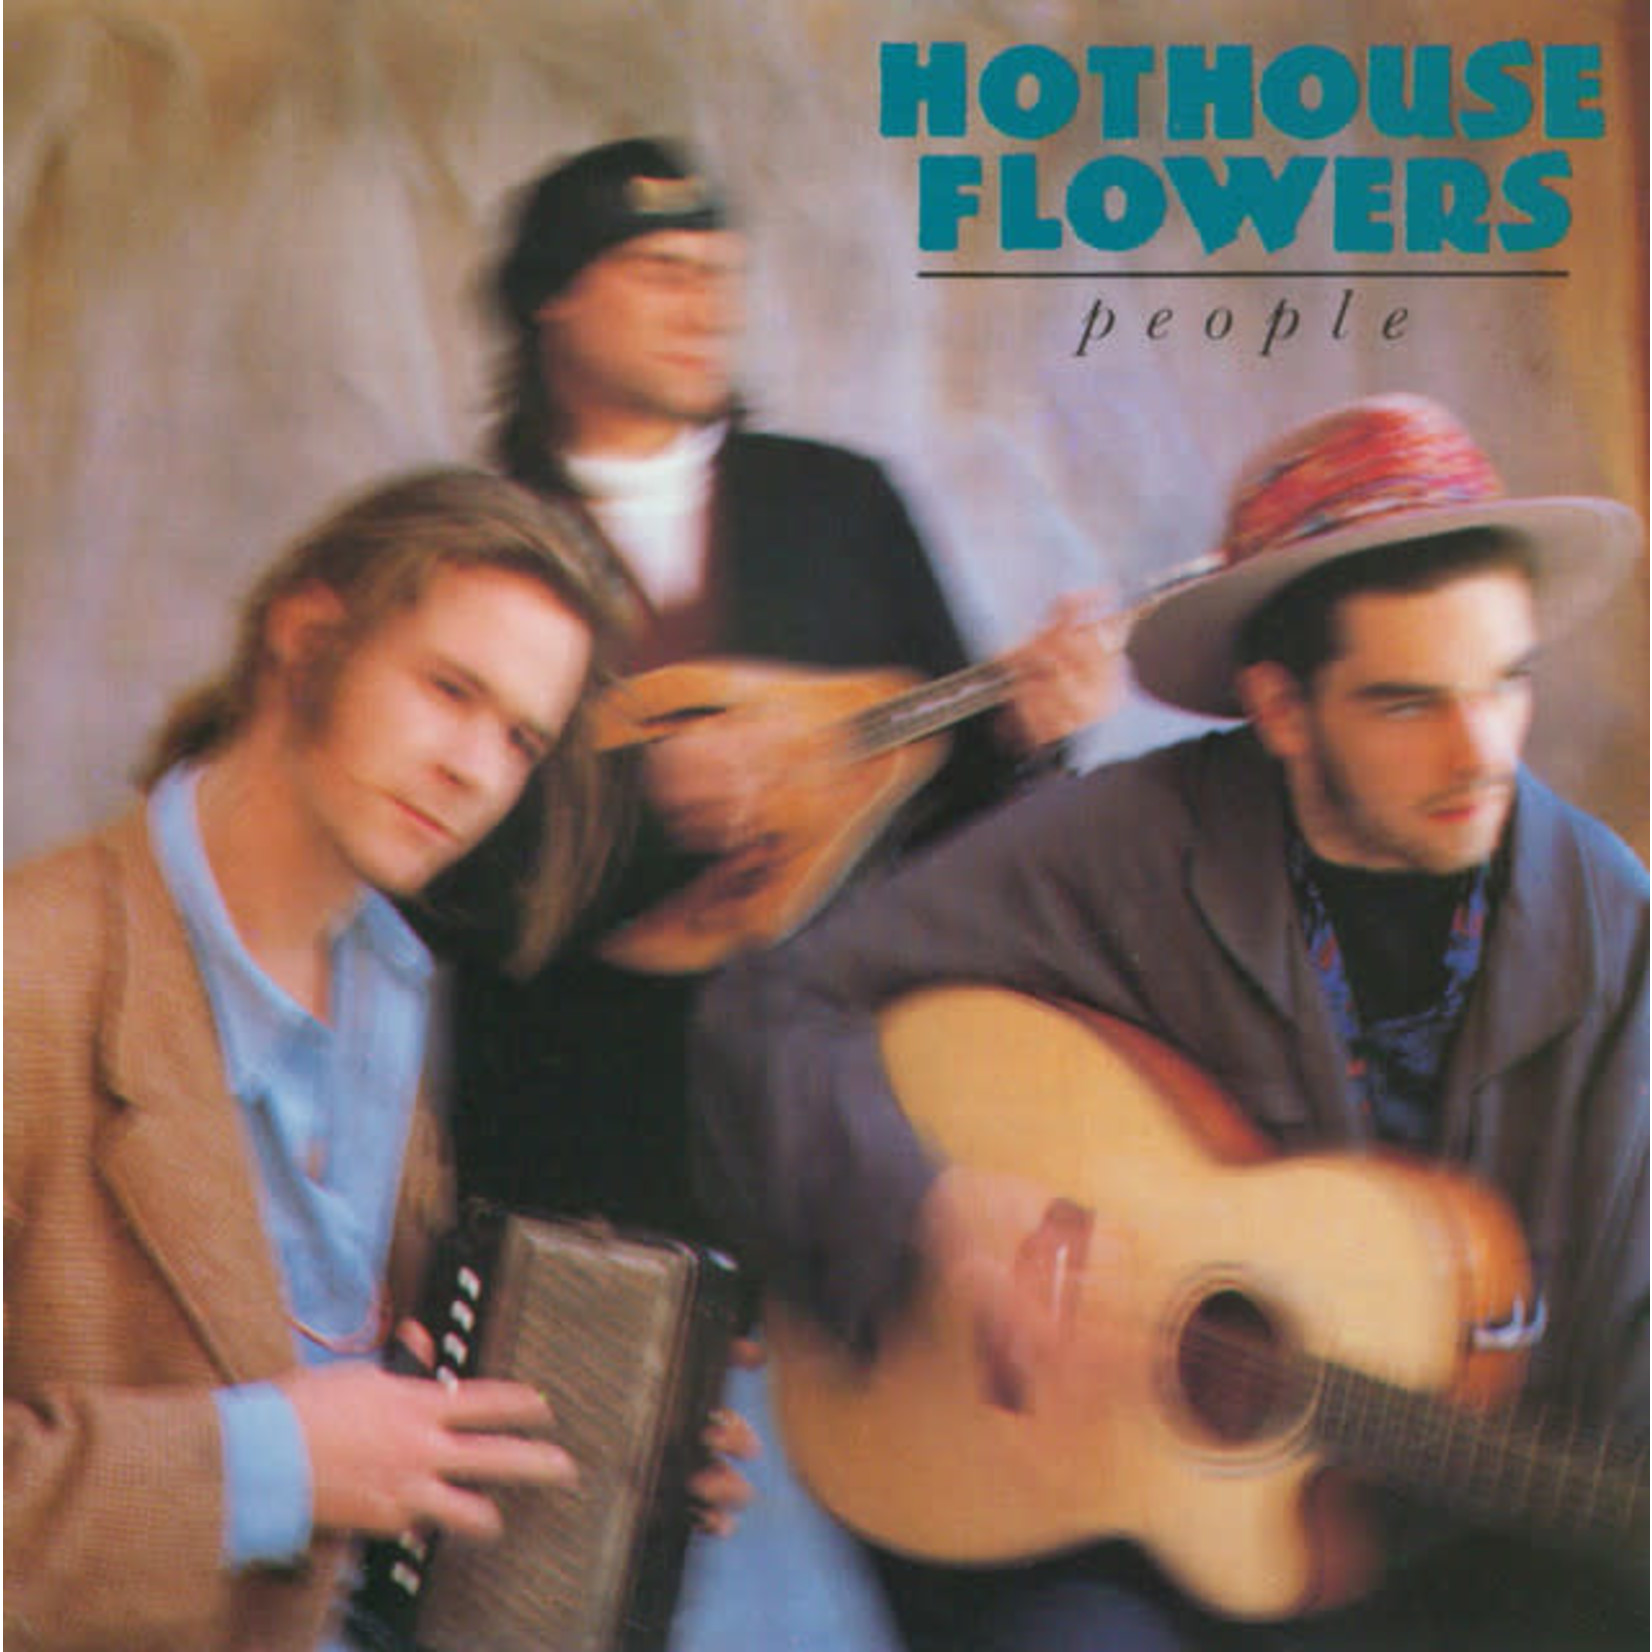 [Vintage] Hothouse Flowers - People